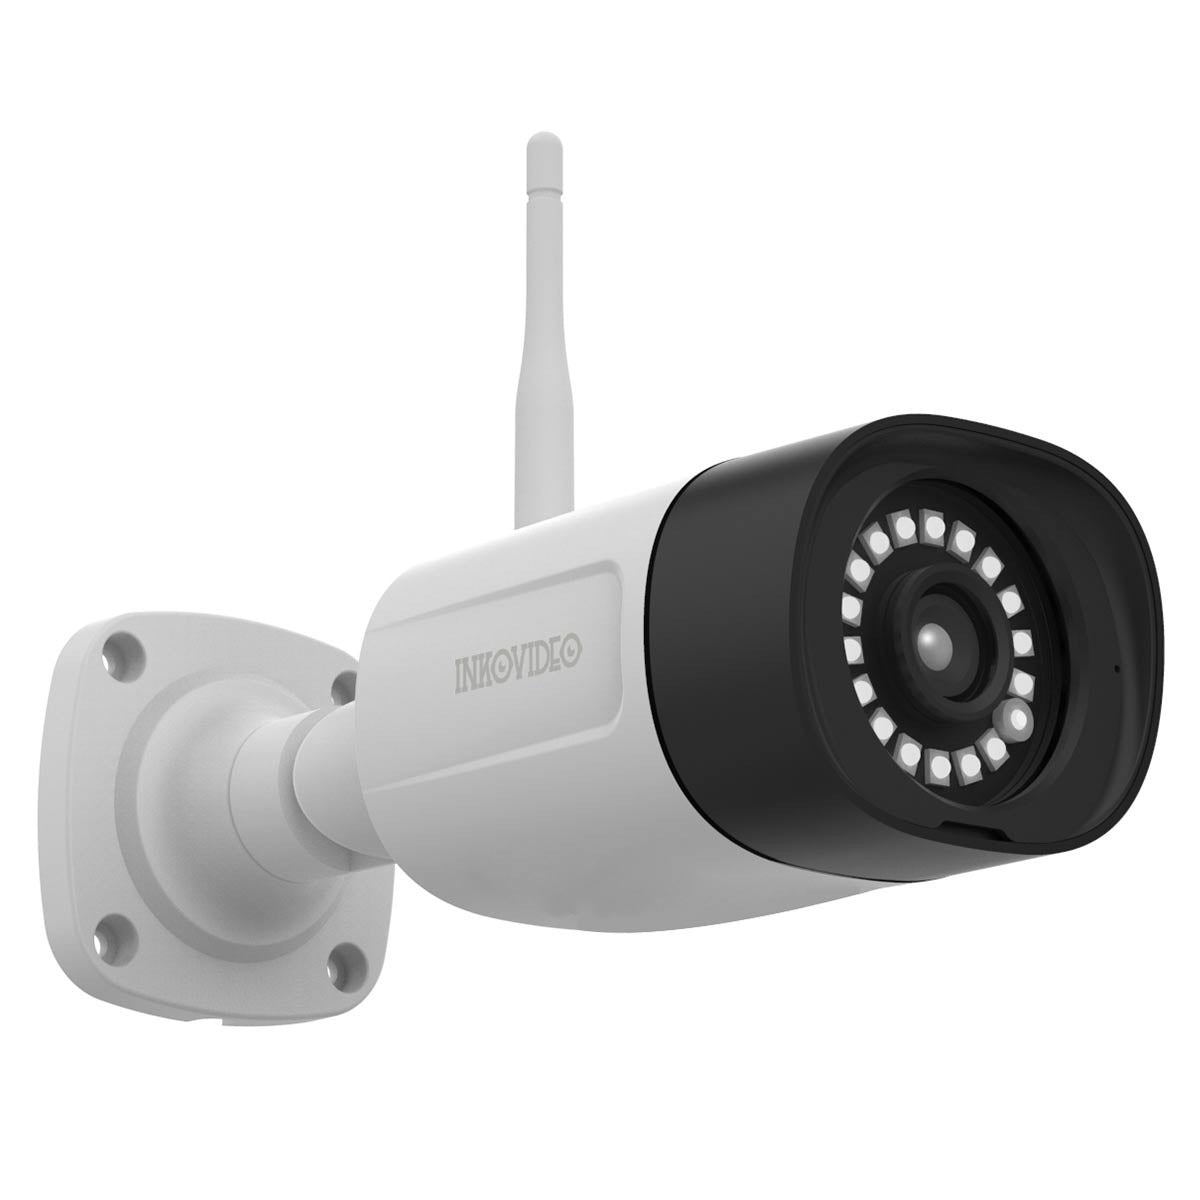 WLAN Überwachungsset mit 4 Kameras inkl.NVR Rekorder, INKO-24M - Calitronshop.com